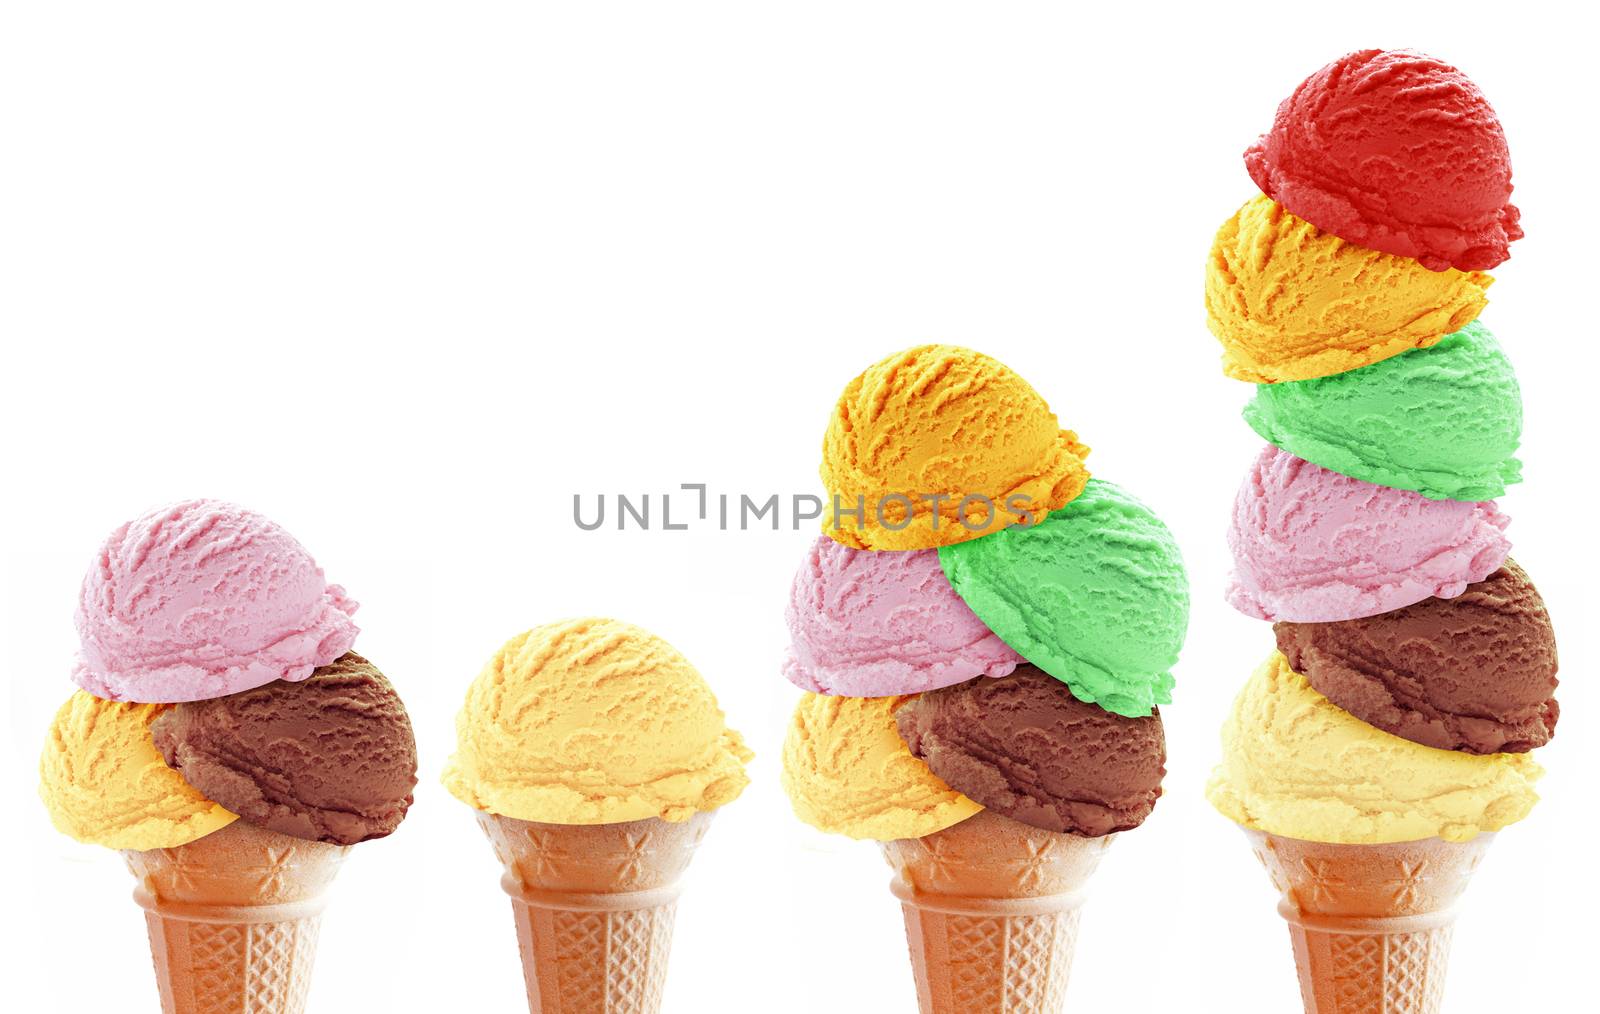 Assorted icecream scoops in cones by unikpix